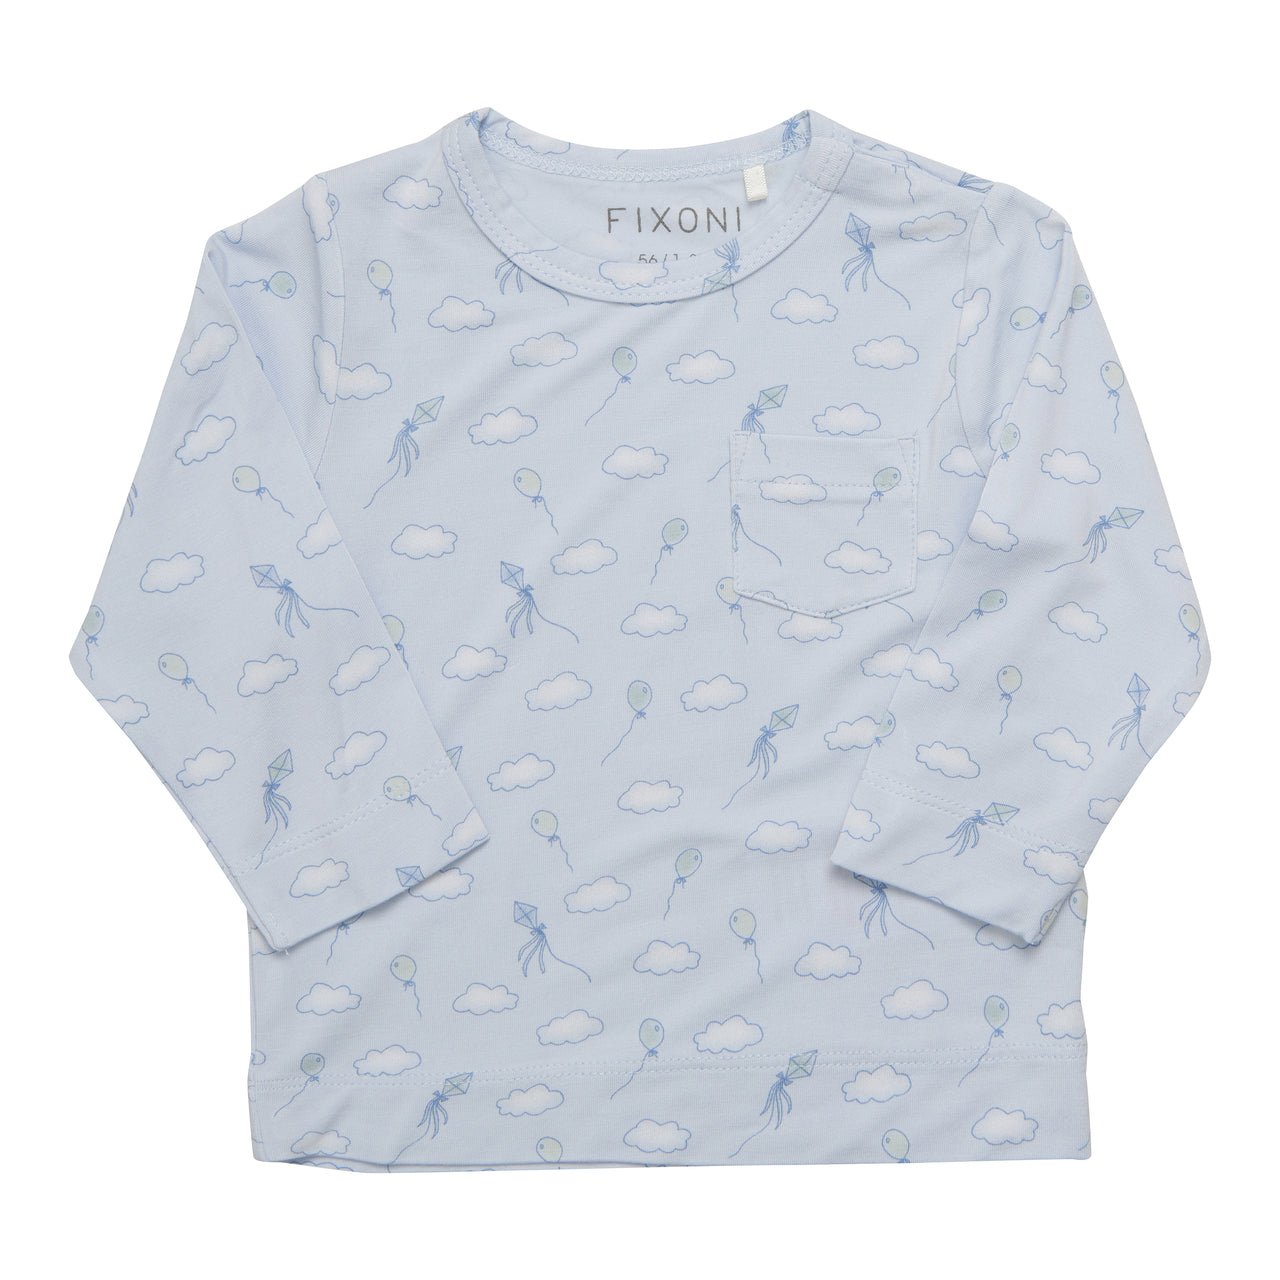 Fixoni Bambus Shirt - Skywriting - Familienbande